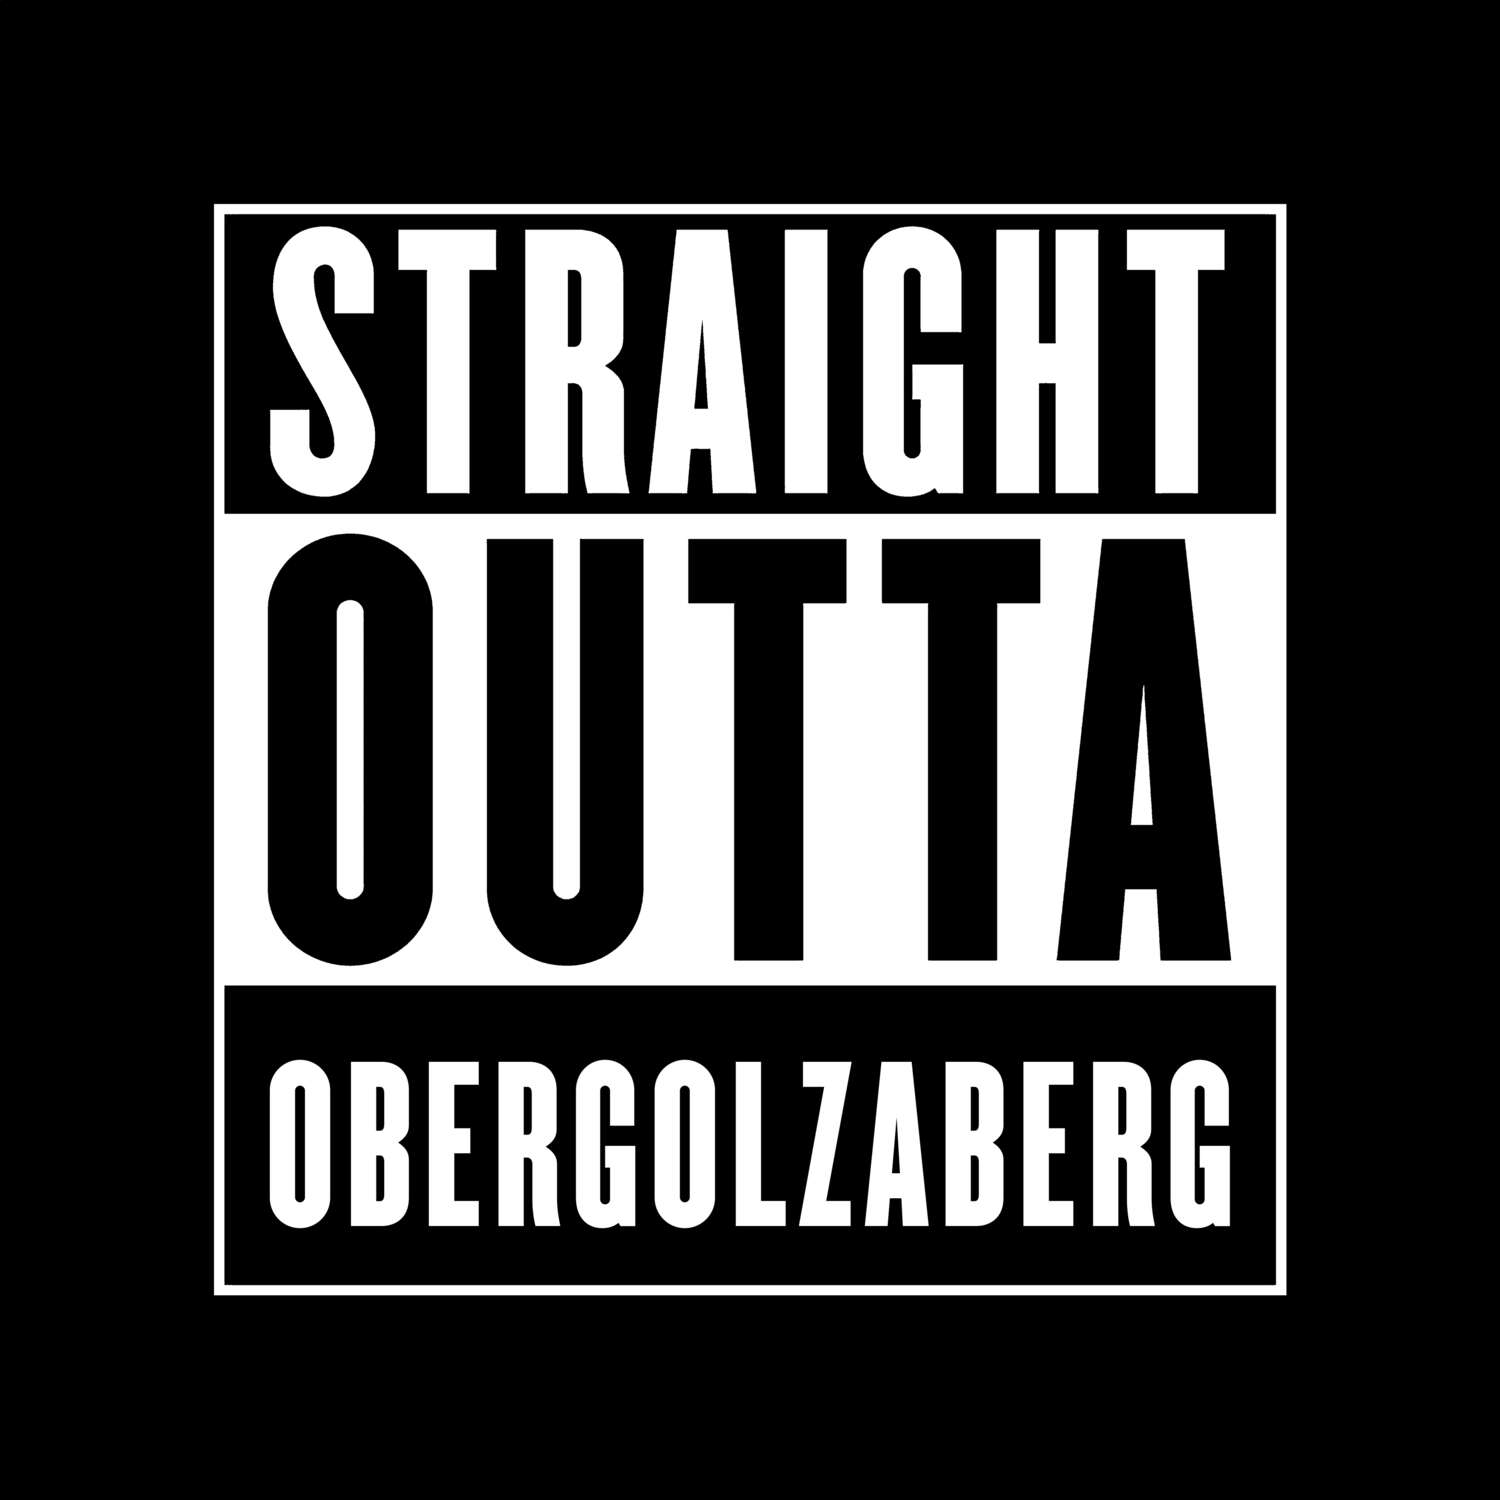 Obergolzaberg T-Shirt »Straight Outta«